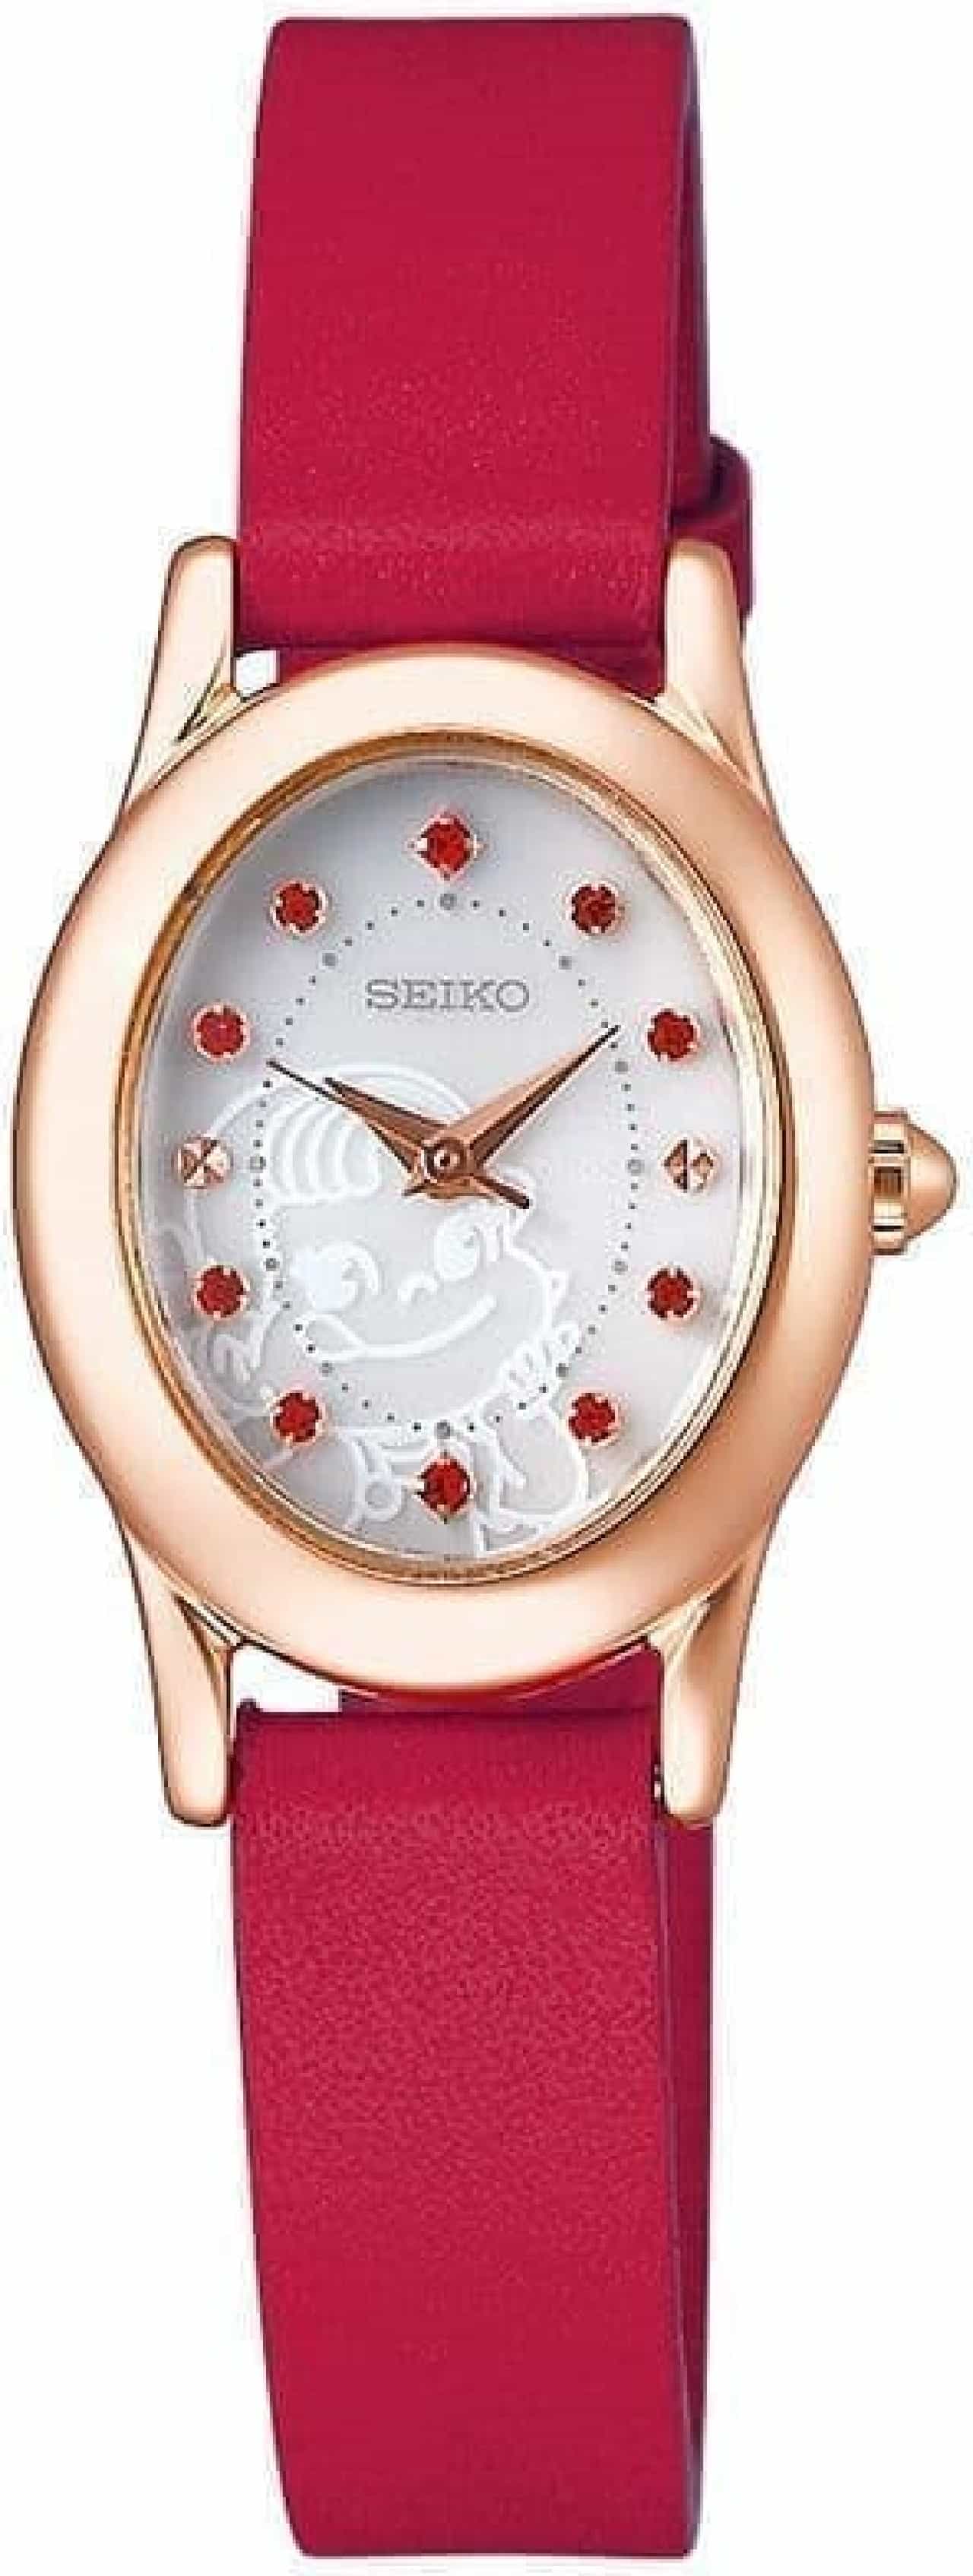 "Peko-chan x SEIKO collaboration watch" at Fujiya official online shop